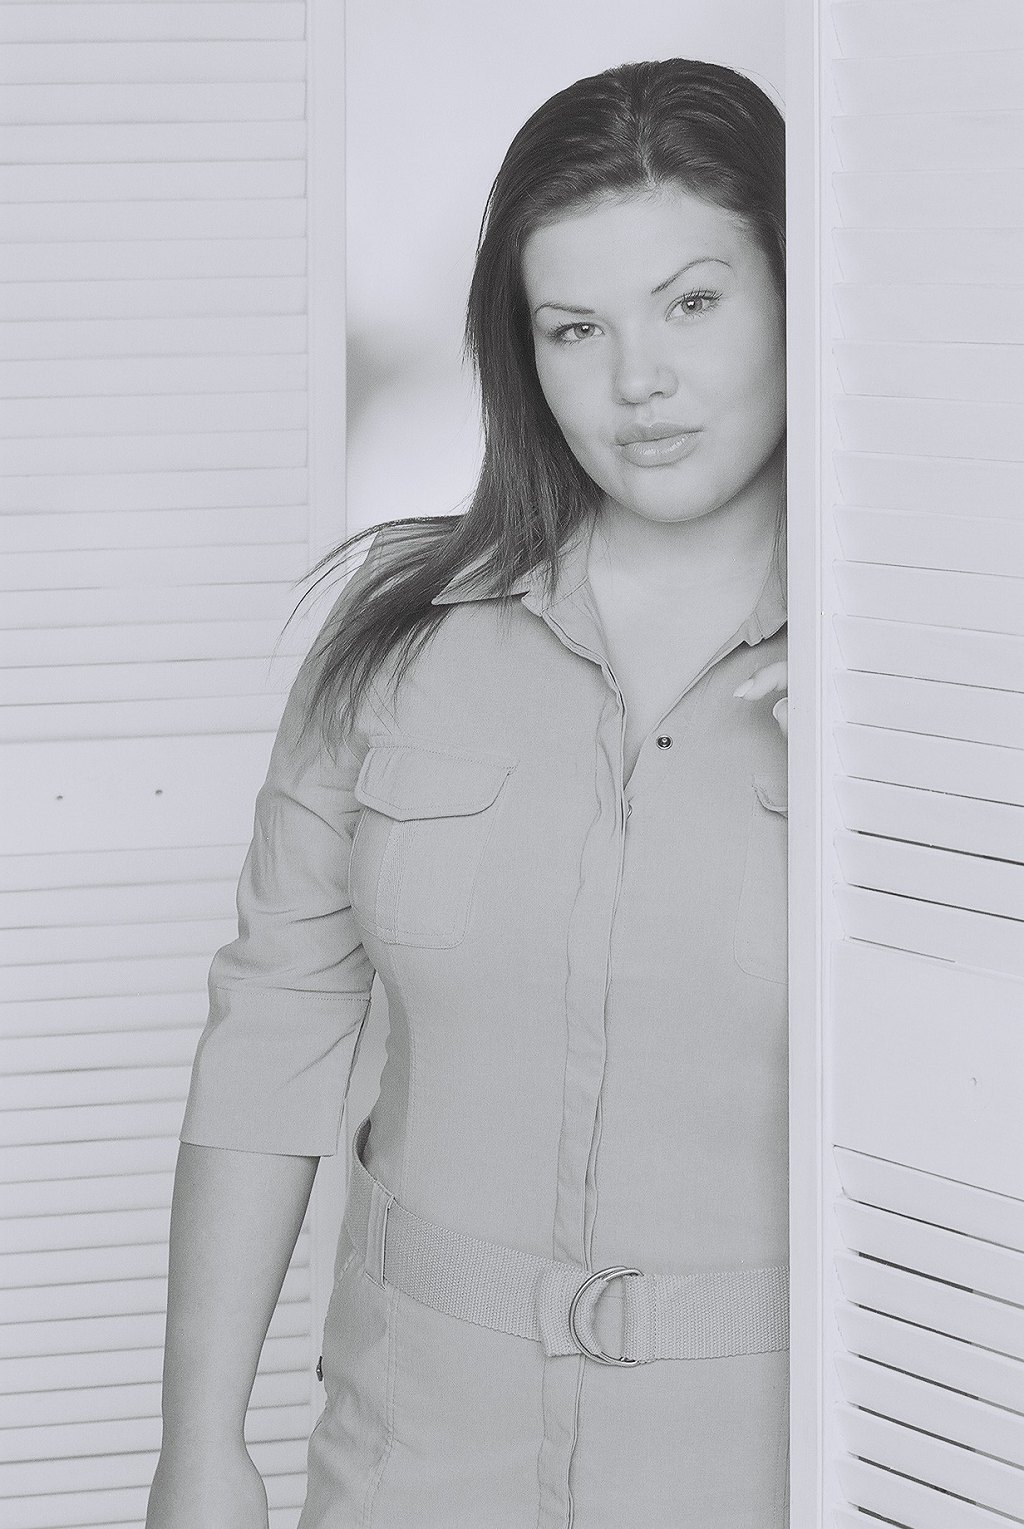 General photo of Christina Schmidt